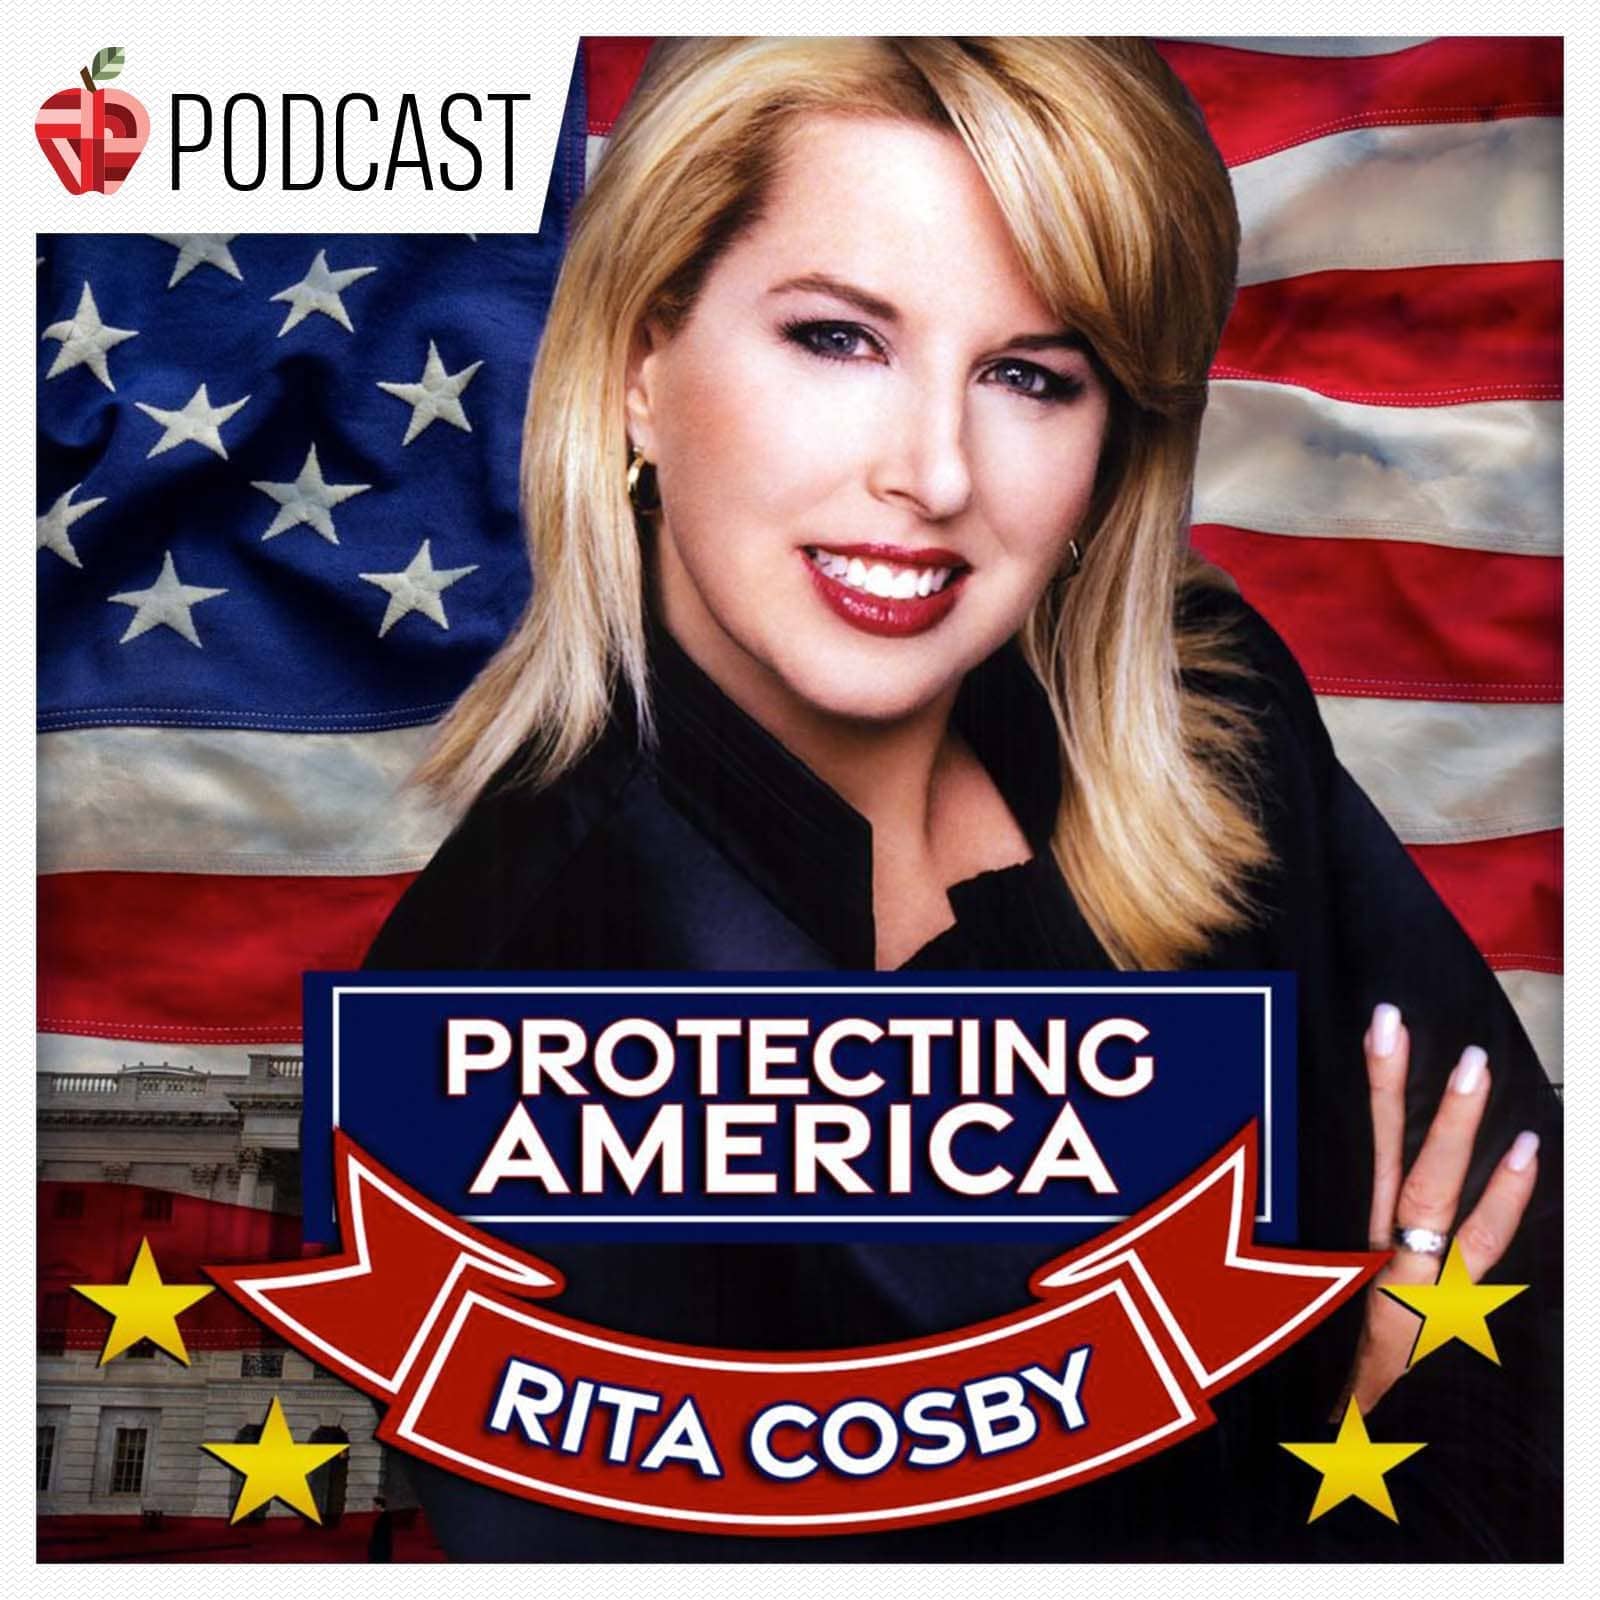 rita-cosby-protecting-america-correct-podcast-new-logo21199